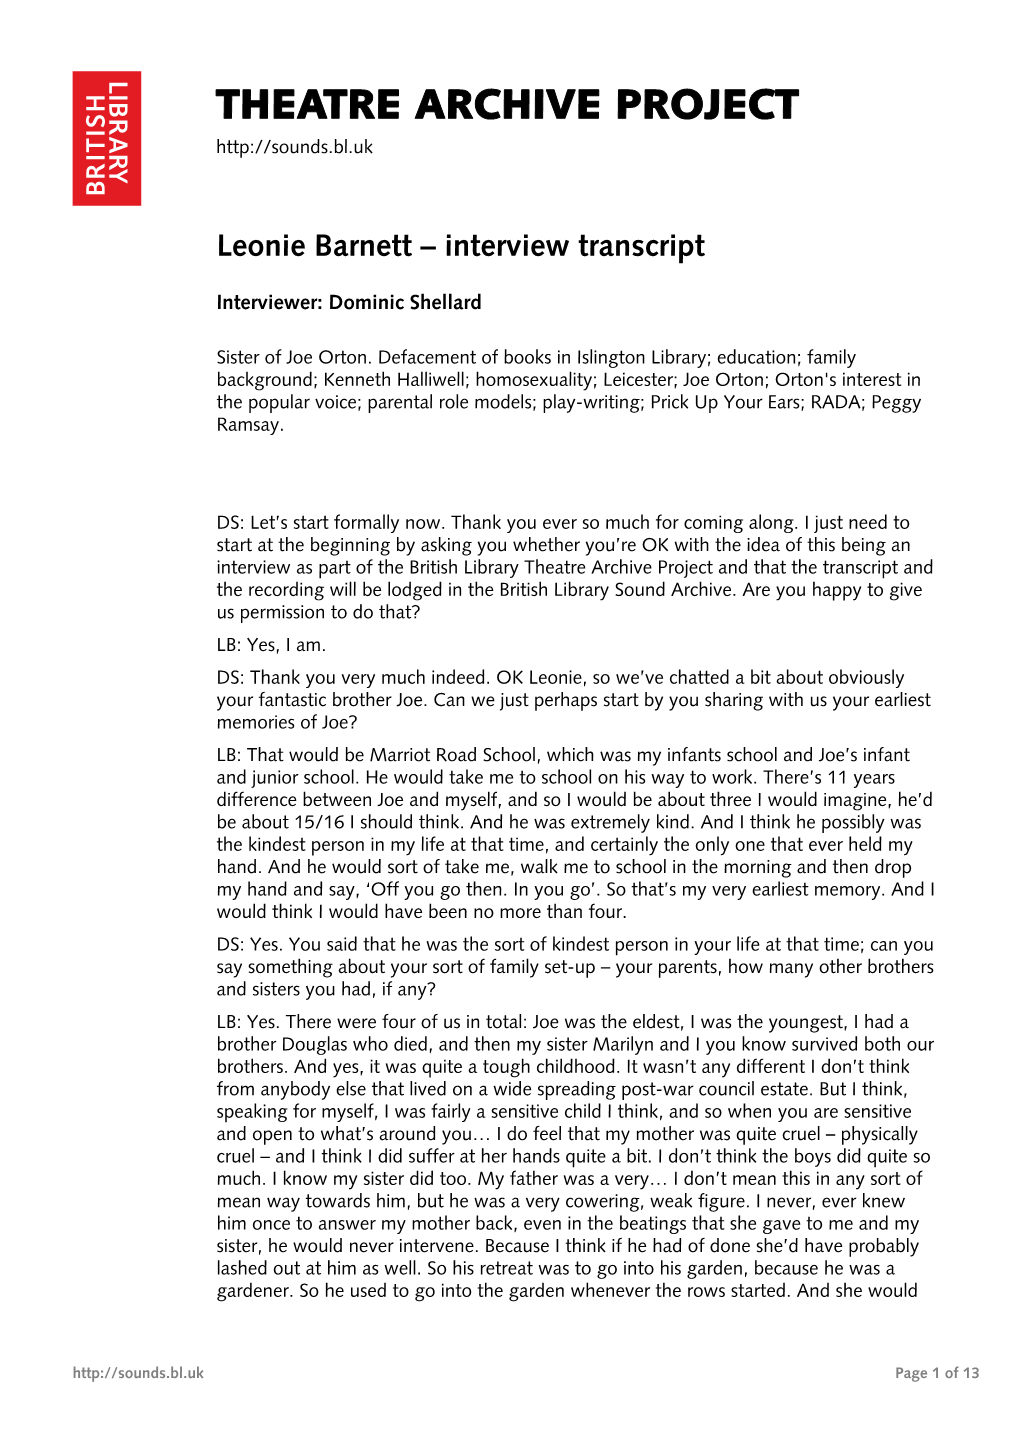 Interview with Leonie Barnett